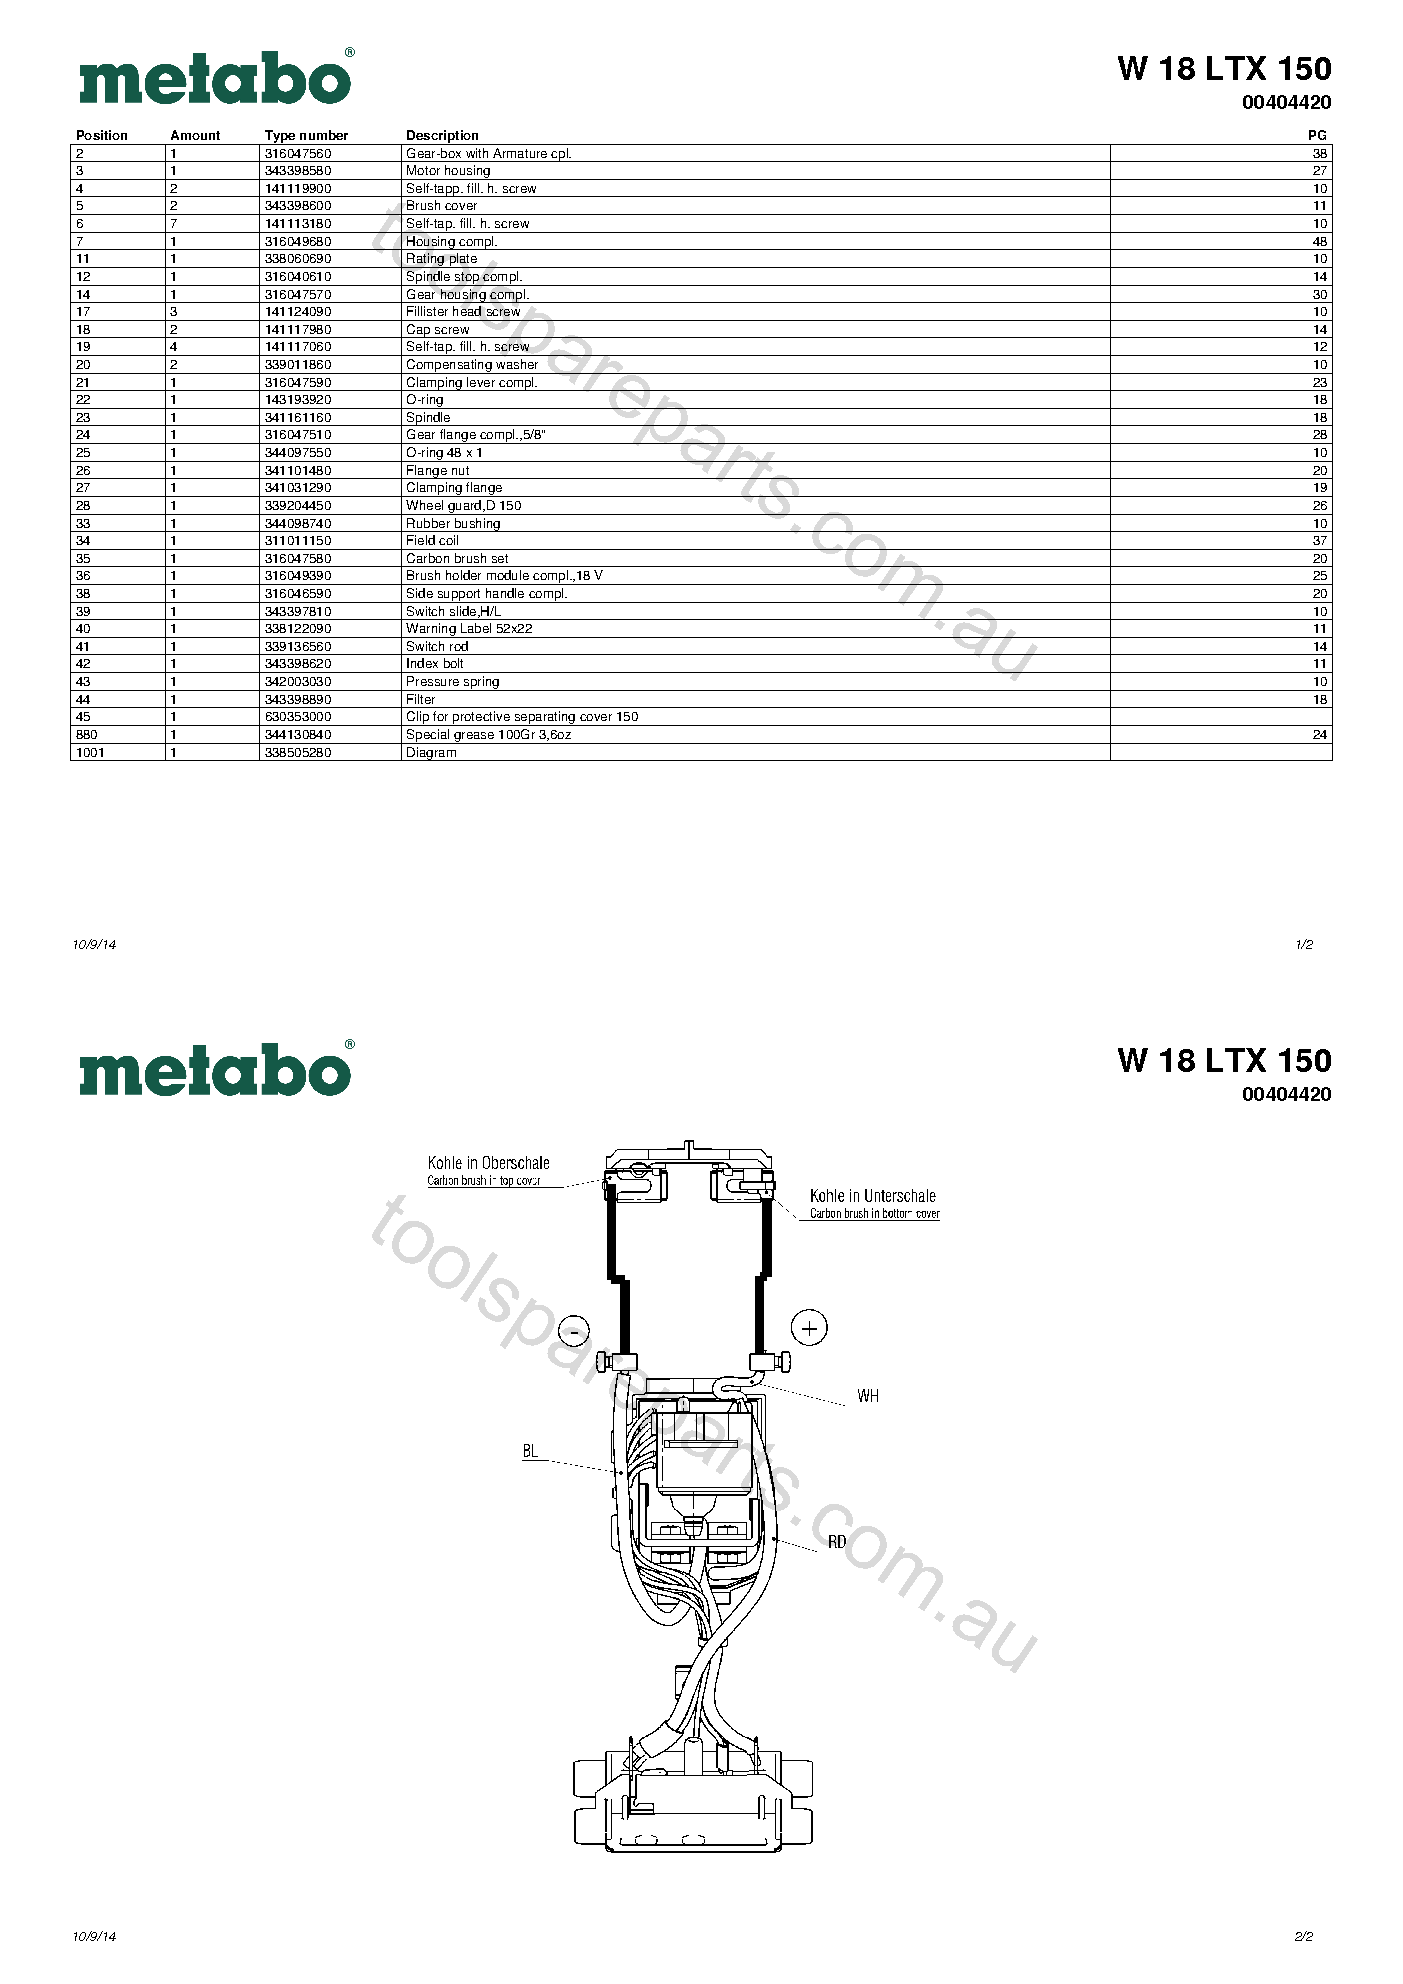 Metabo W 18 LTX 150 00404420  Diagram 1